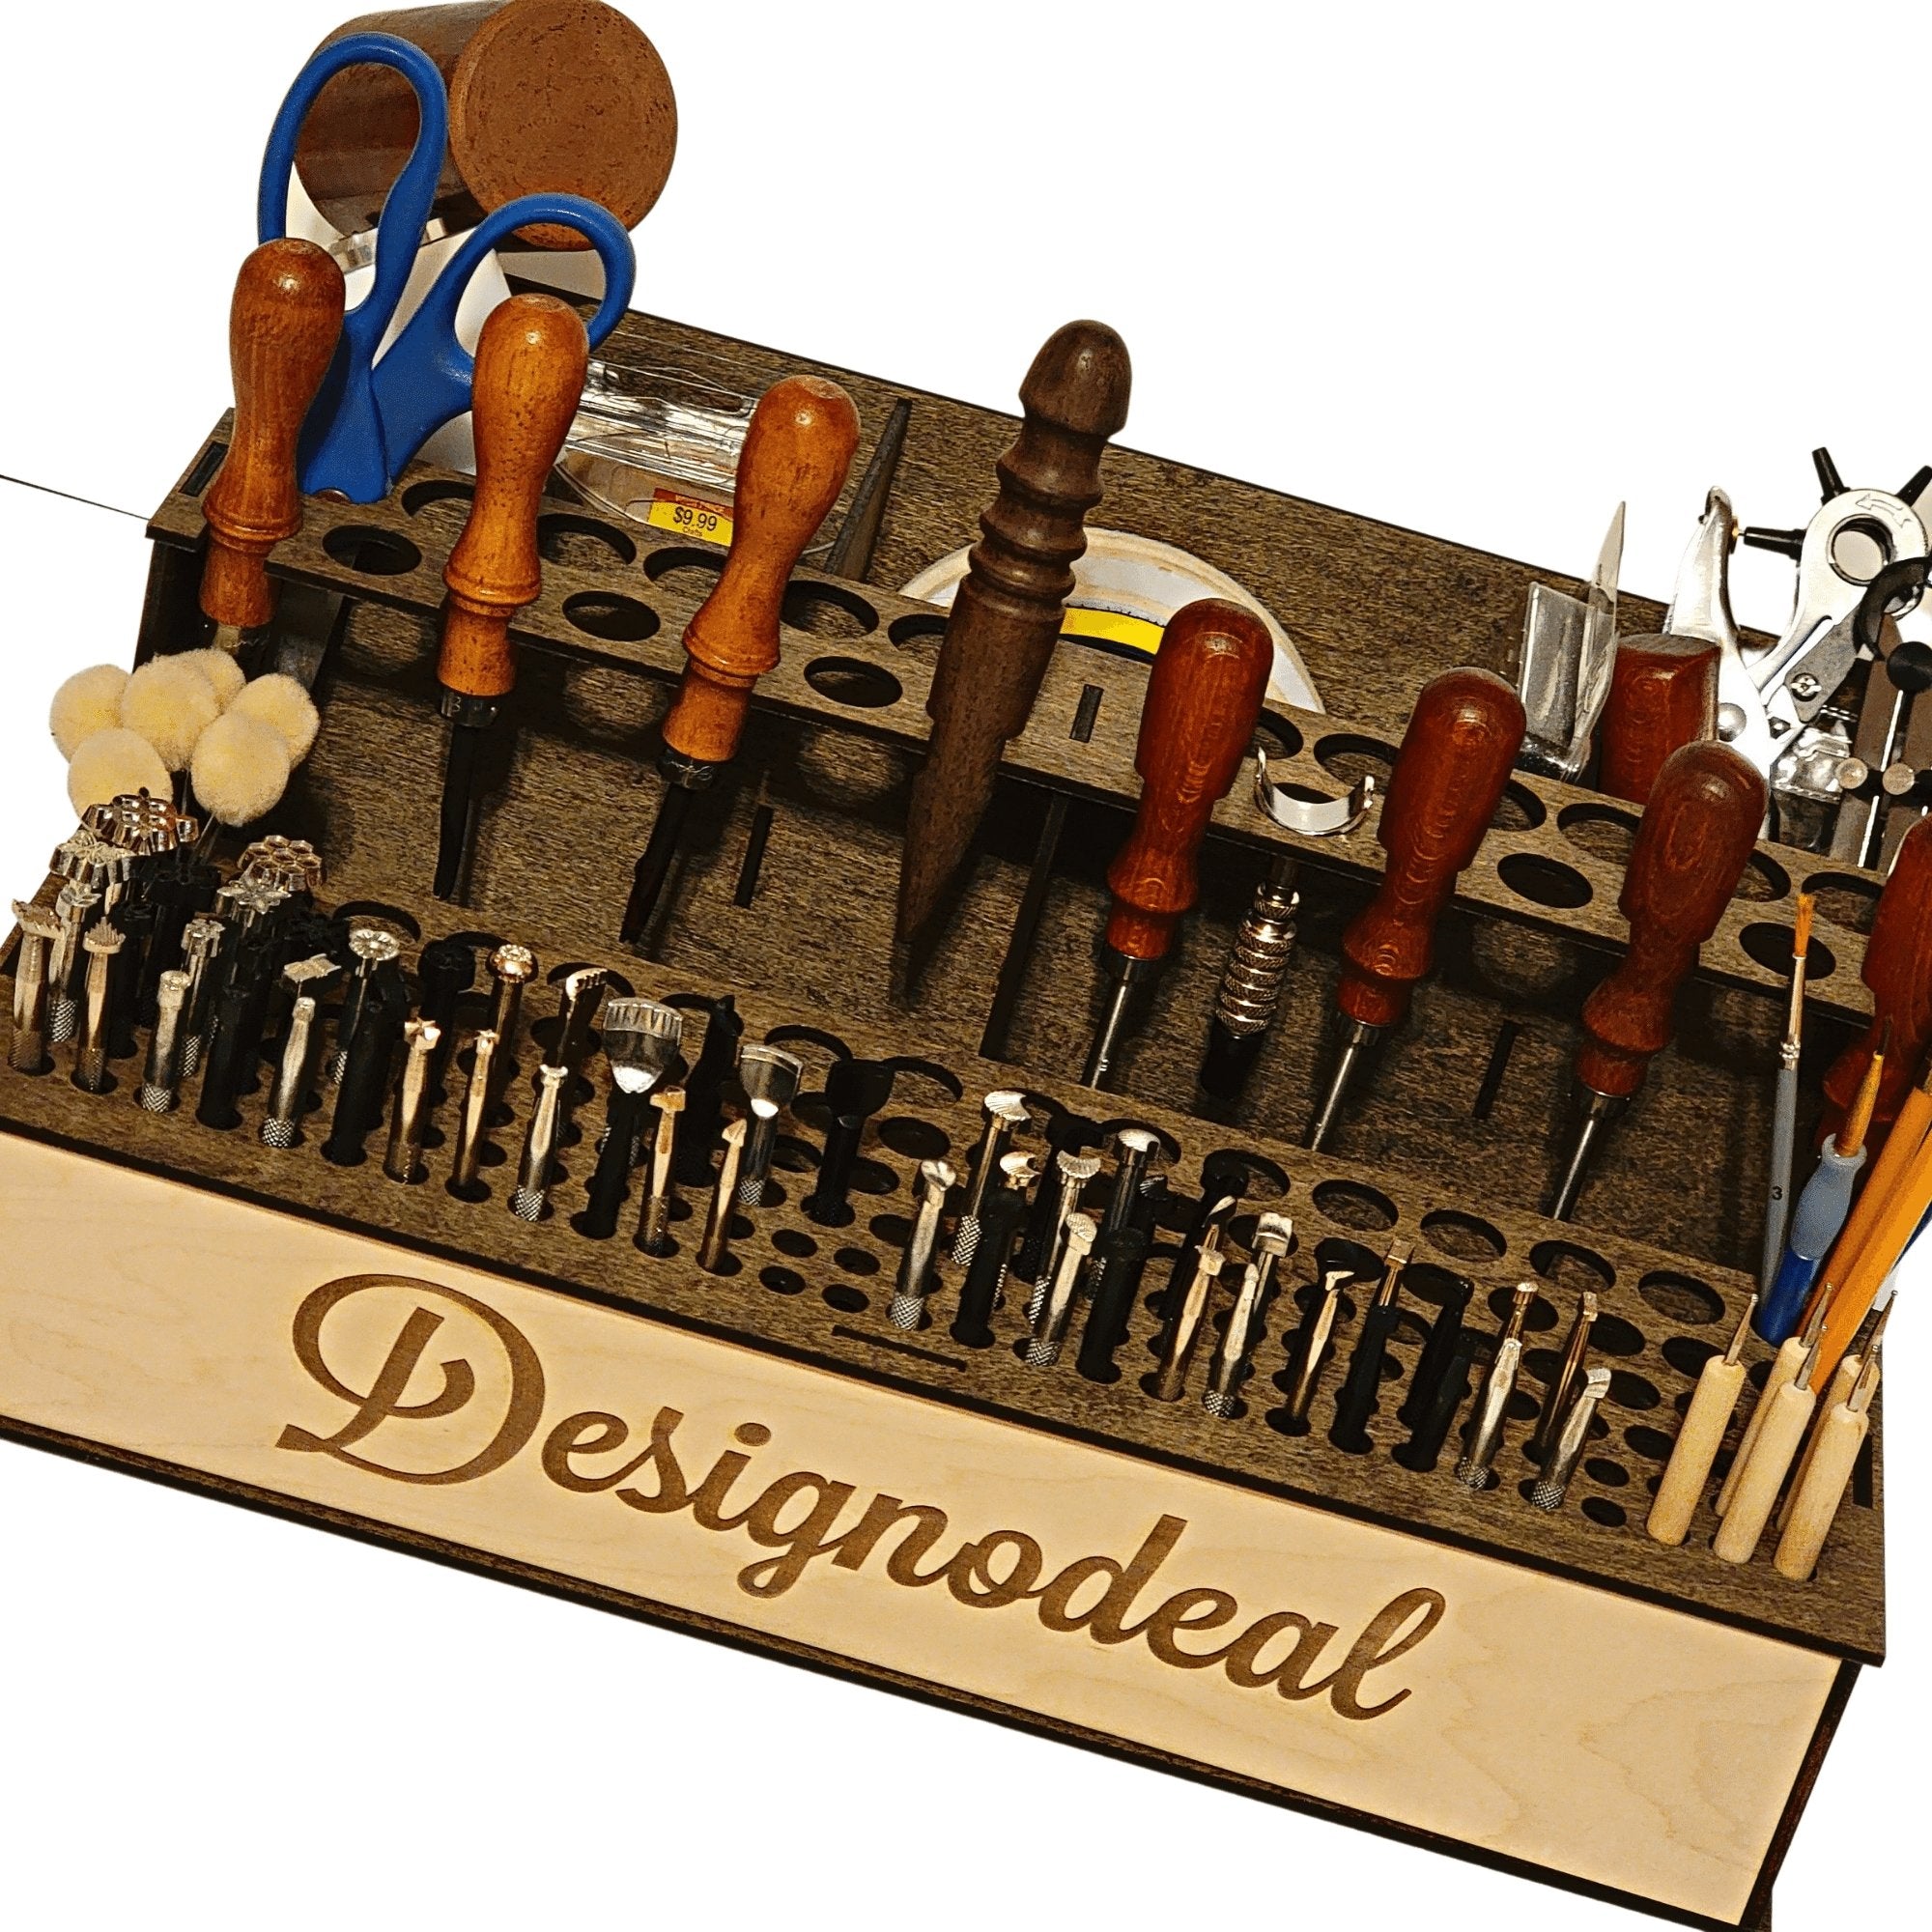 Leather Tools Desktop Organizer - Large - Designodeal